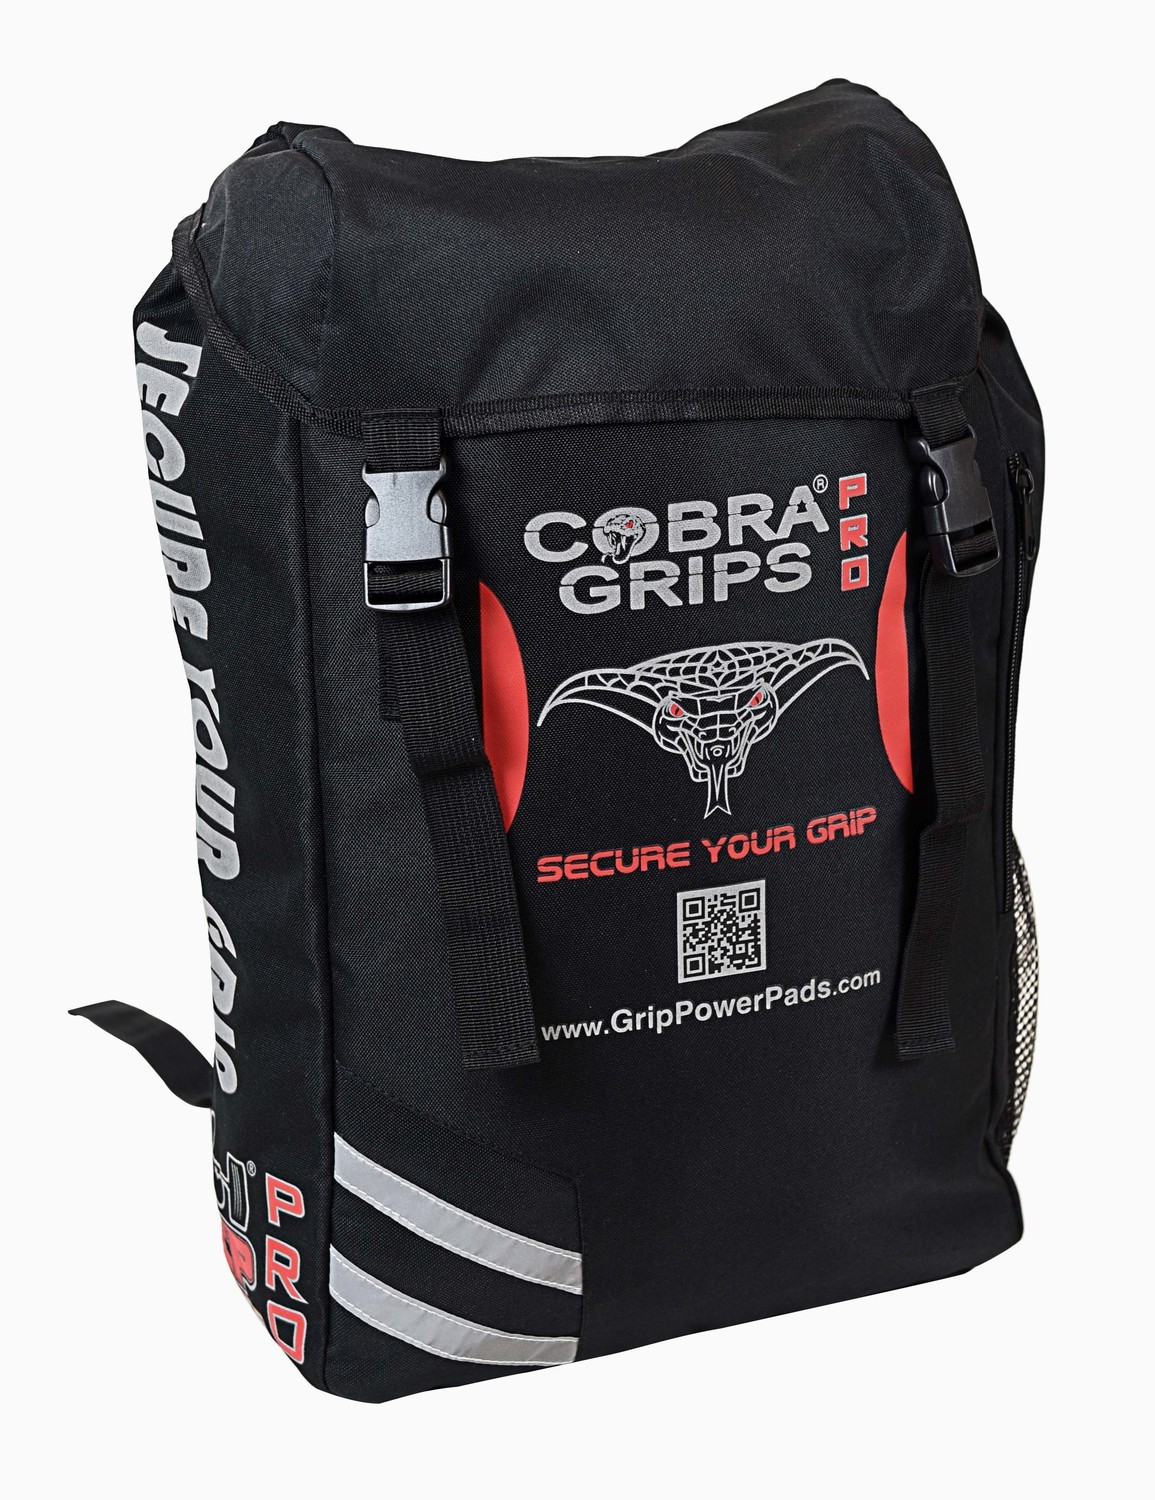 Cobra Grips Sport Sackpack Gym Bag